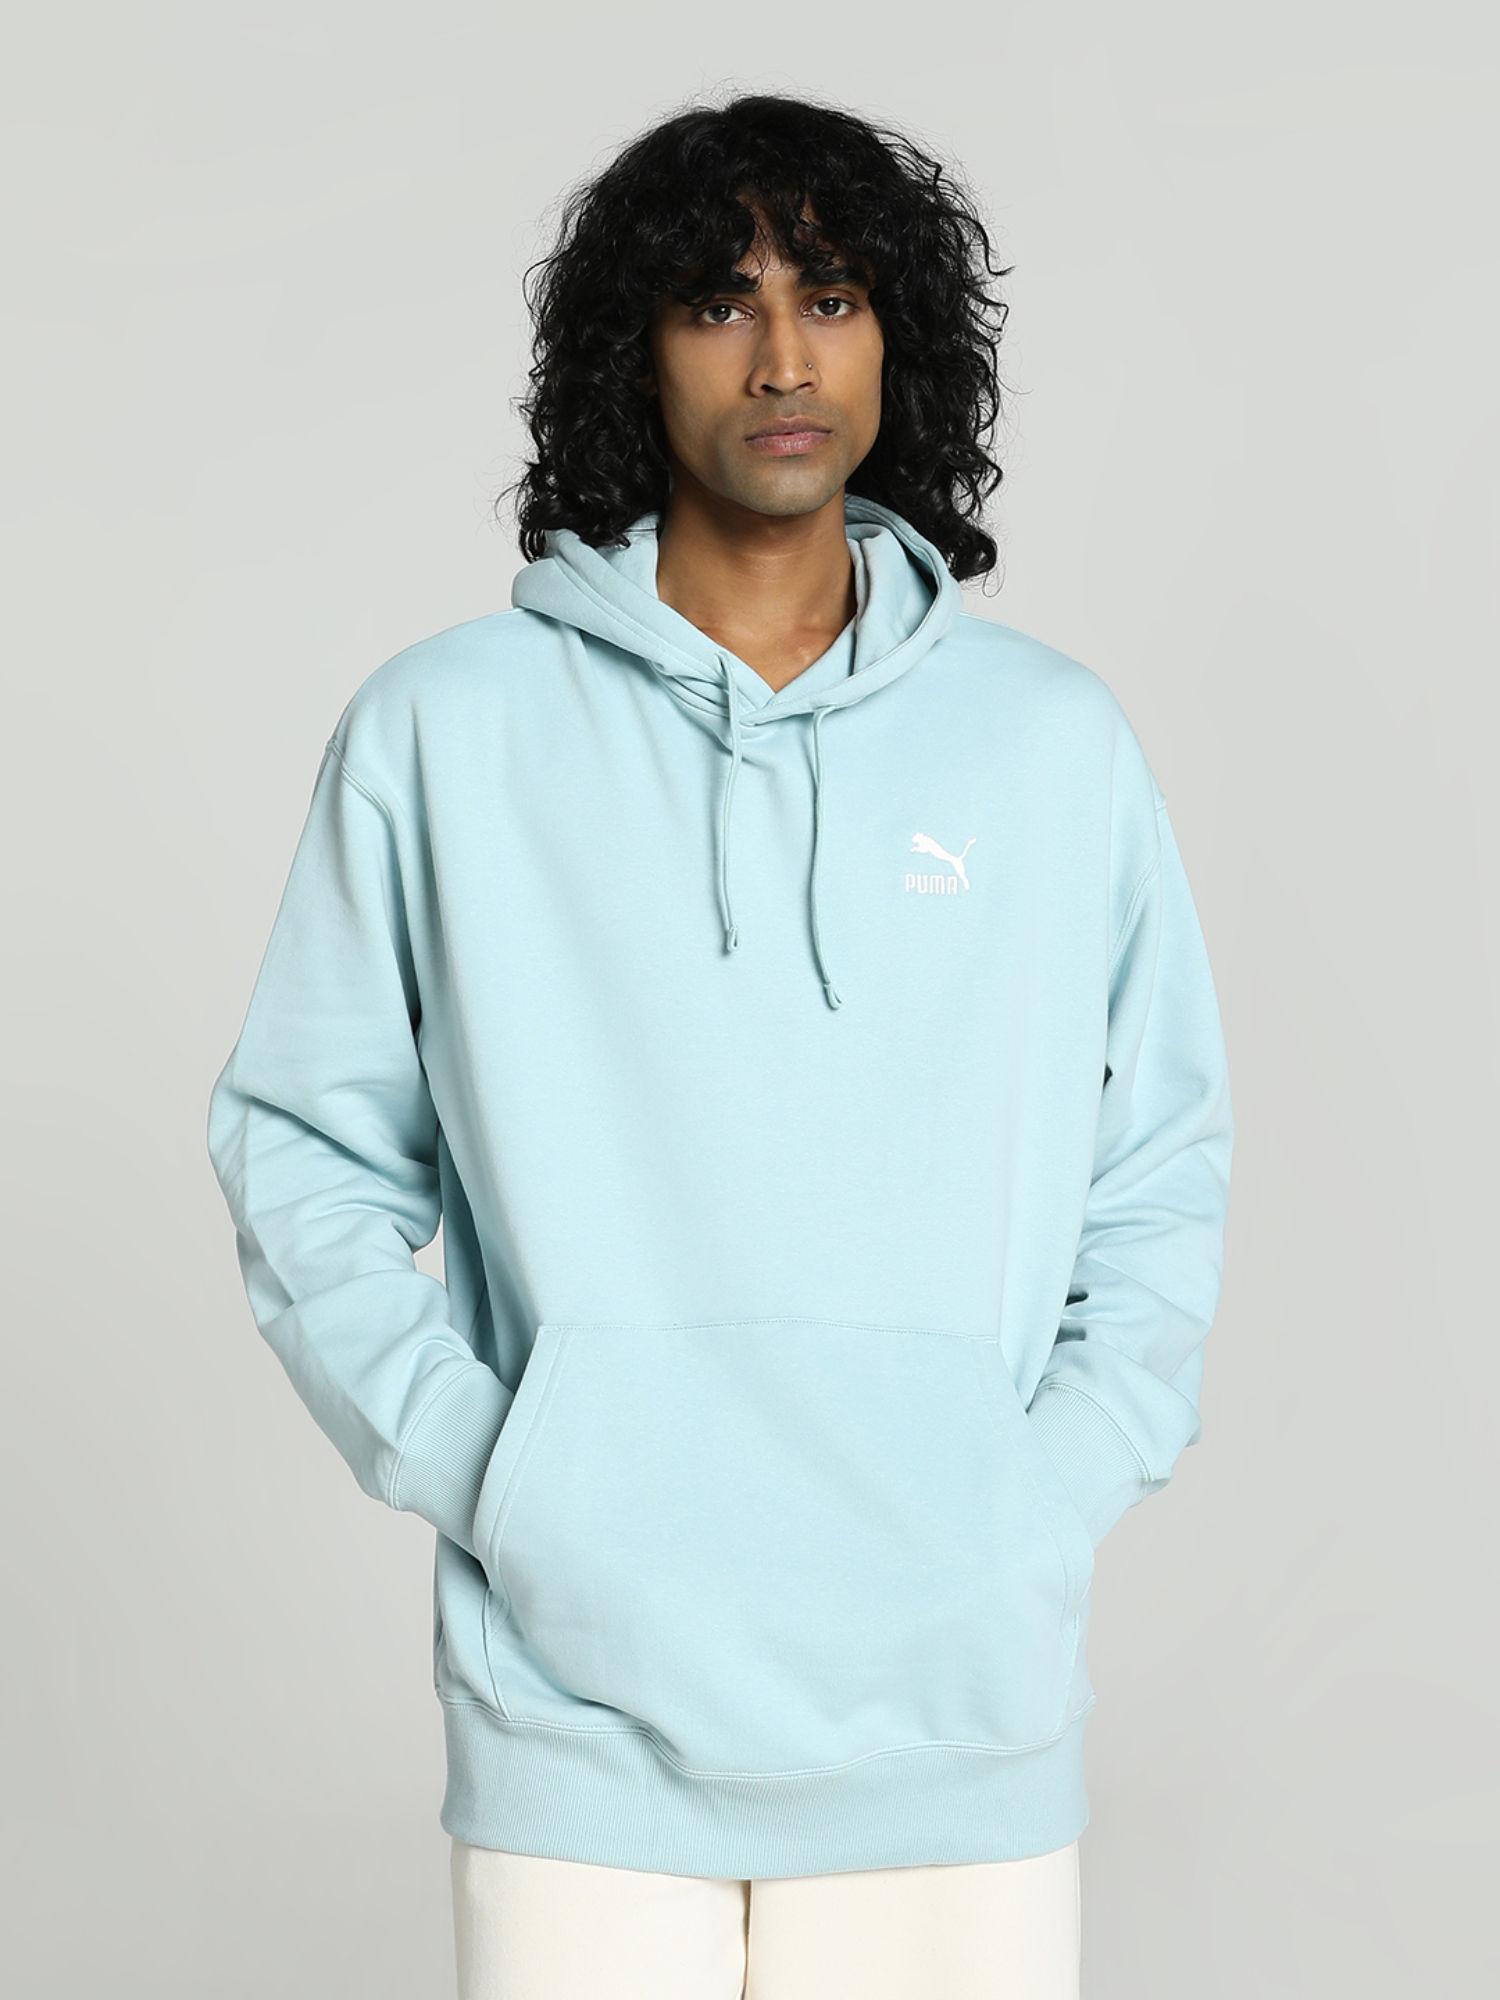 better classics unisex blue hoodies